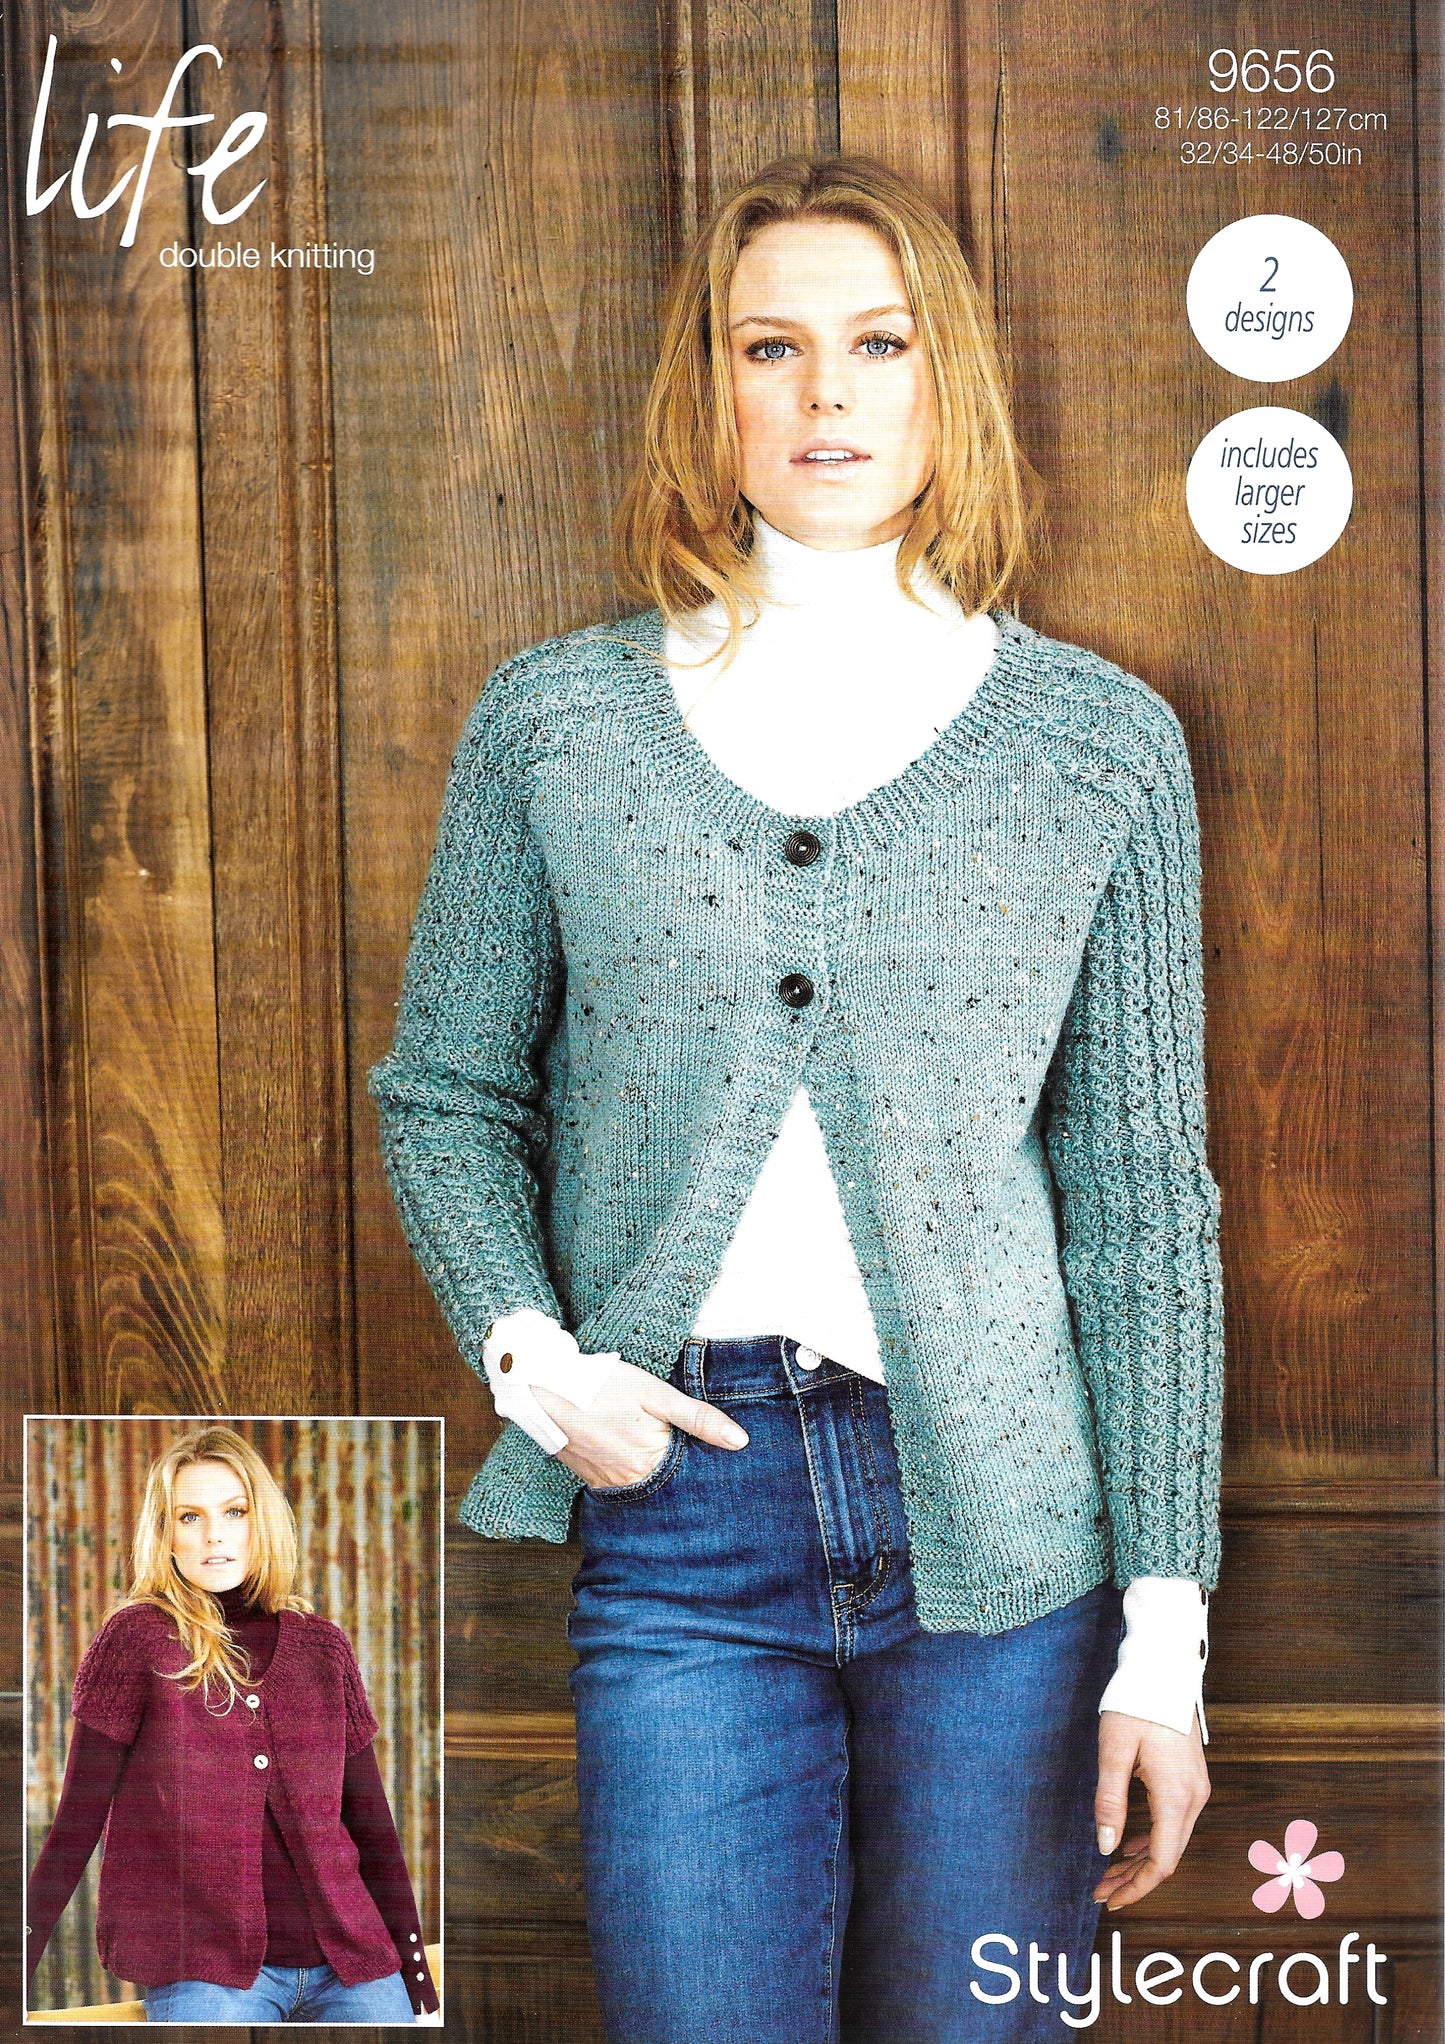 9656 Stylecraft knitting pattern. Lady's Cardigans.  Double Knitting